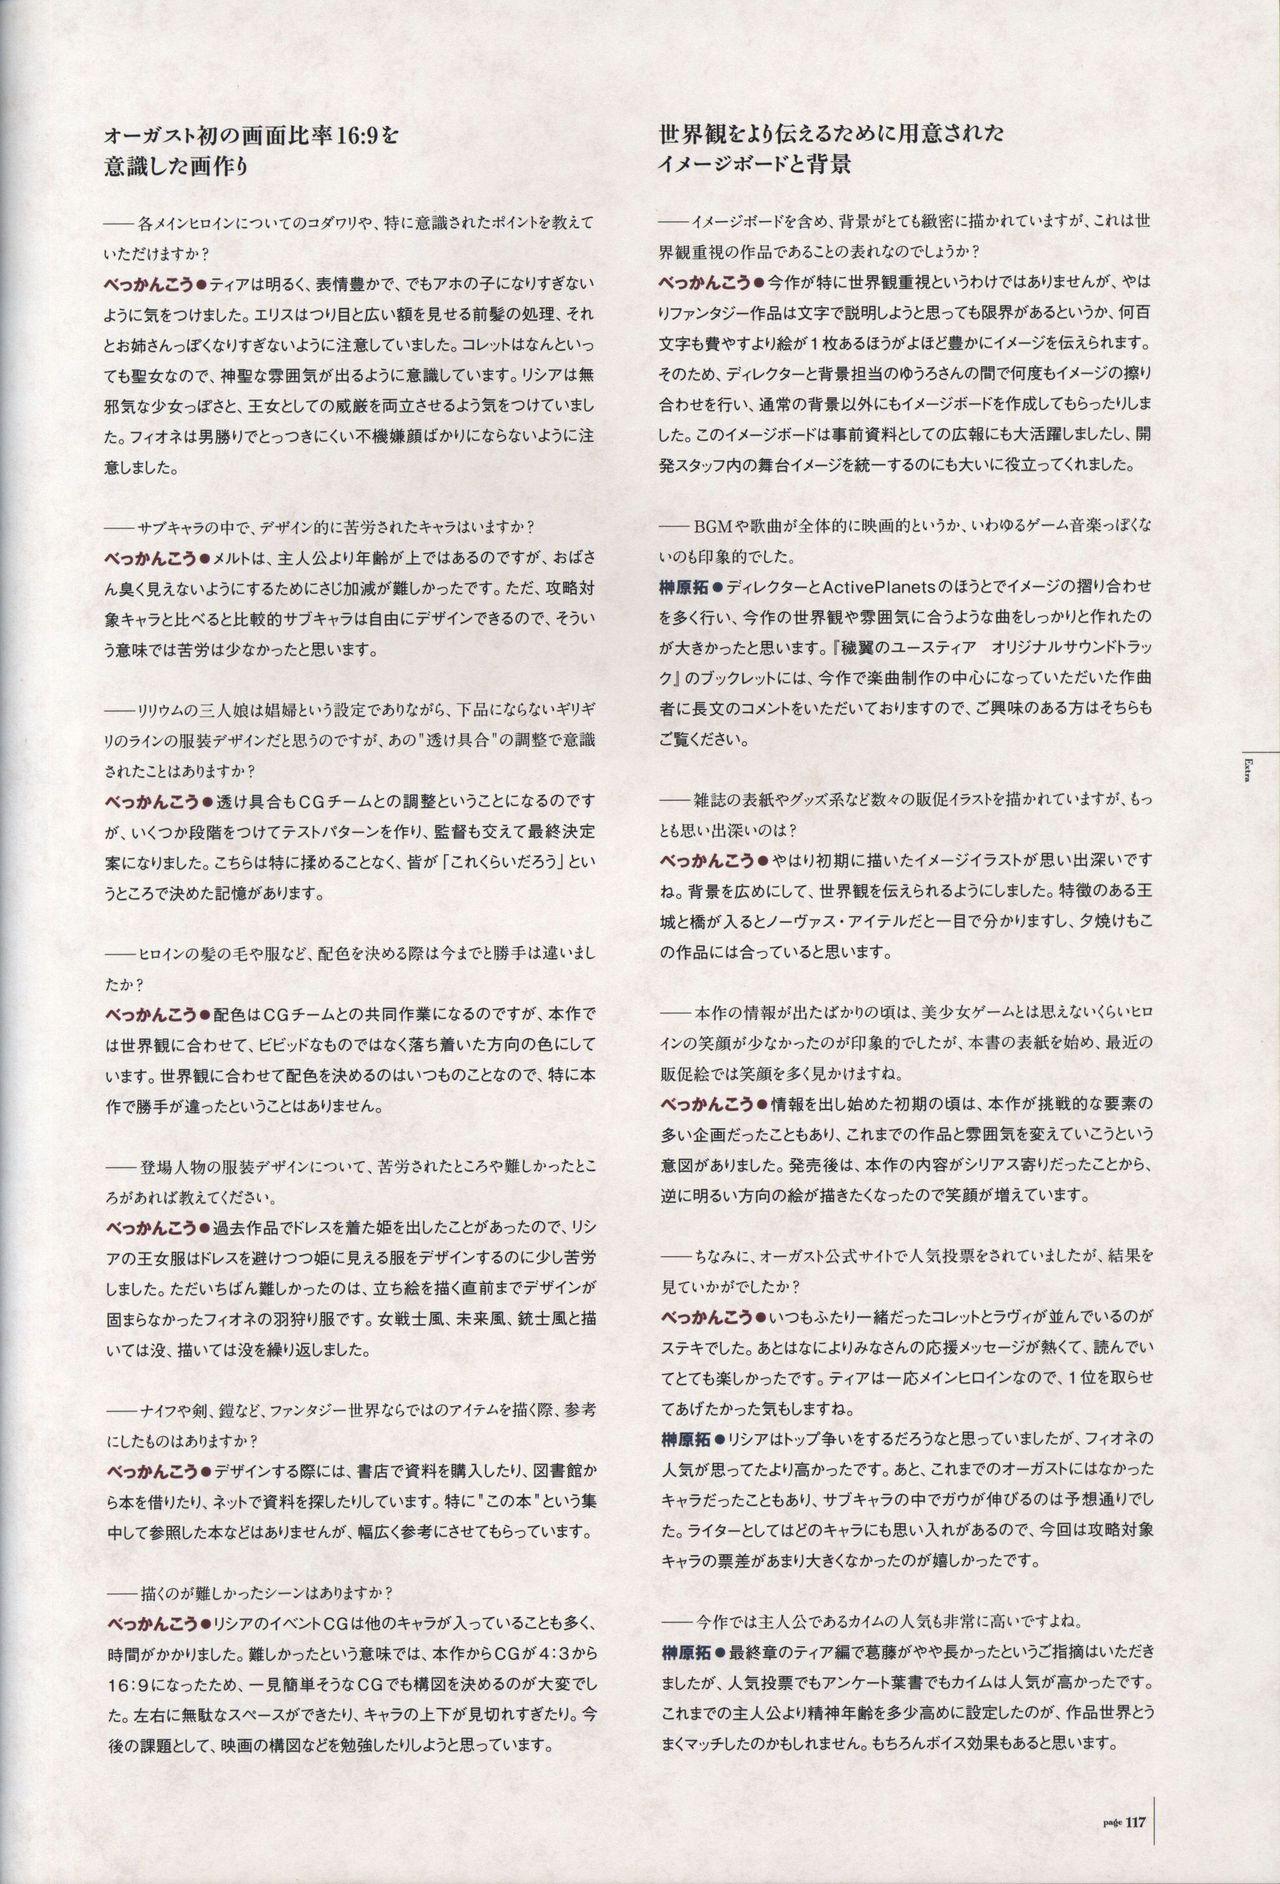 Aiyoku no Eustia VISUAL FANBOOK 117